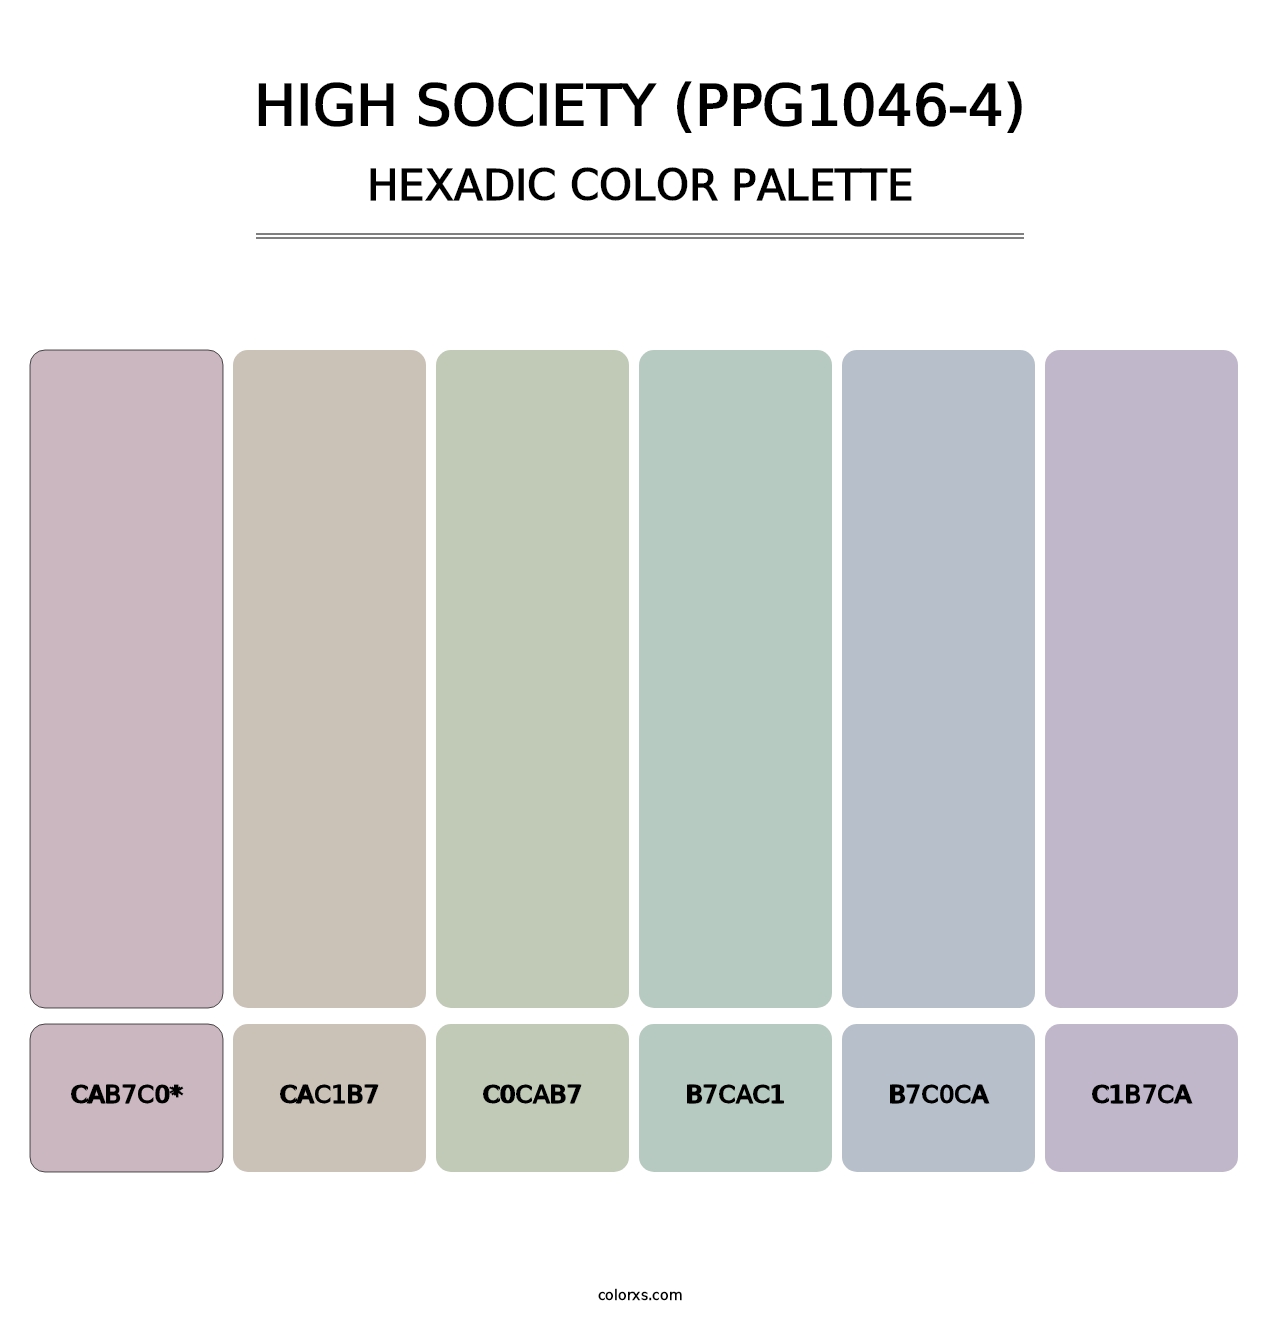 High Society (PPG1046-4) - Hexadic Color Palette